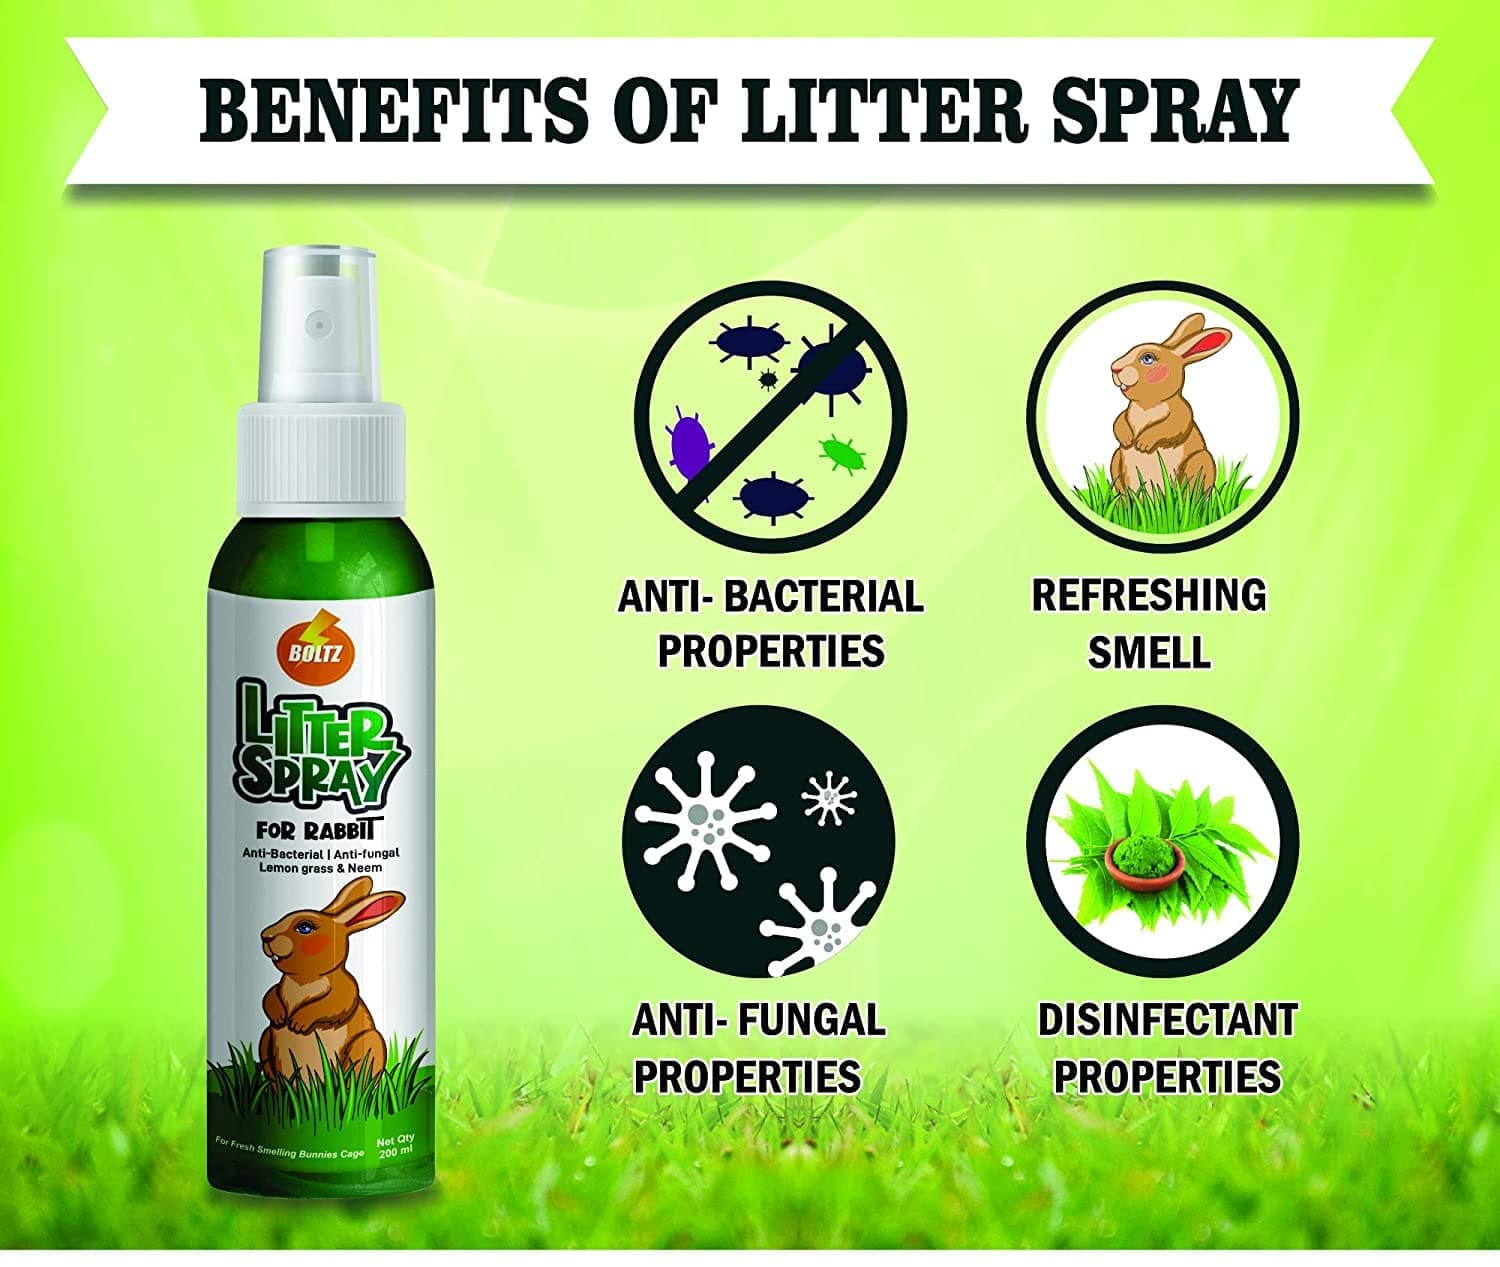 Boltz Antibacterial Litter Spray for Rabbit